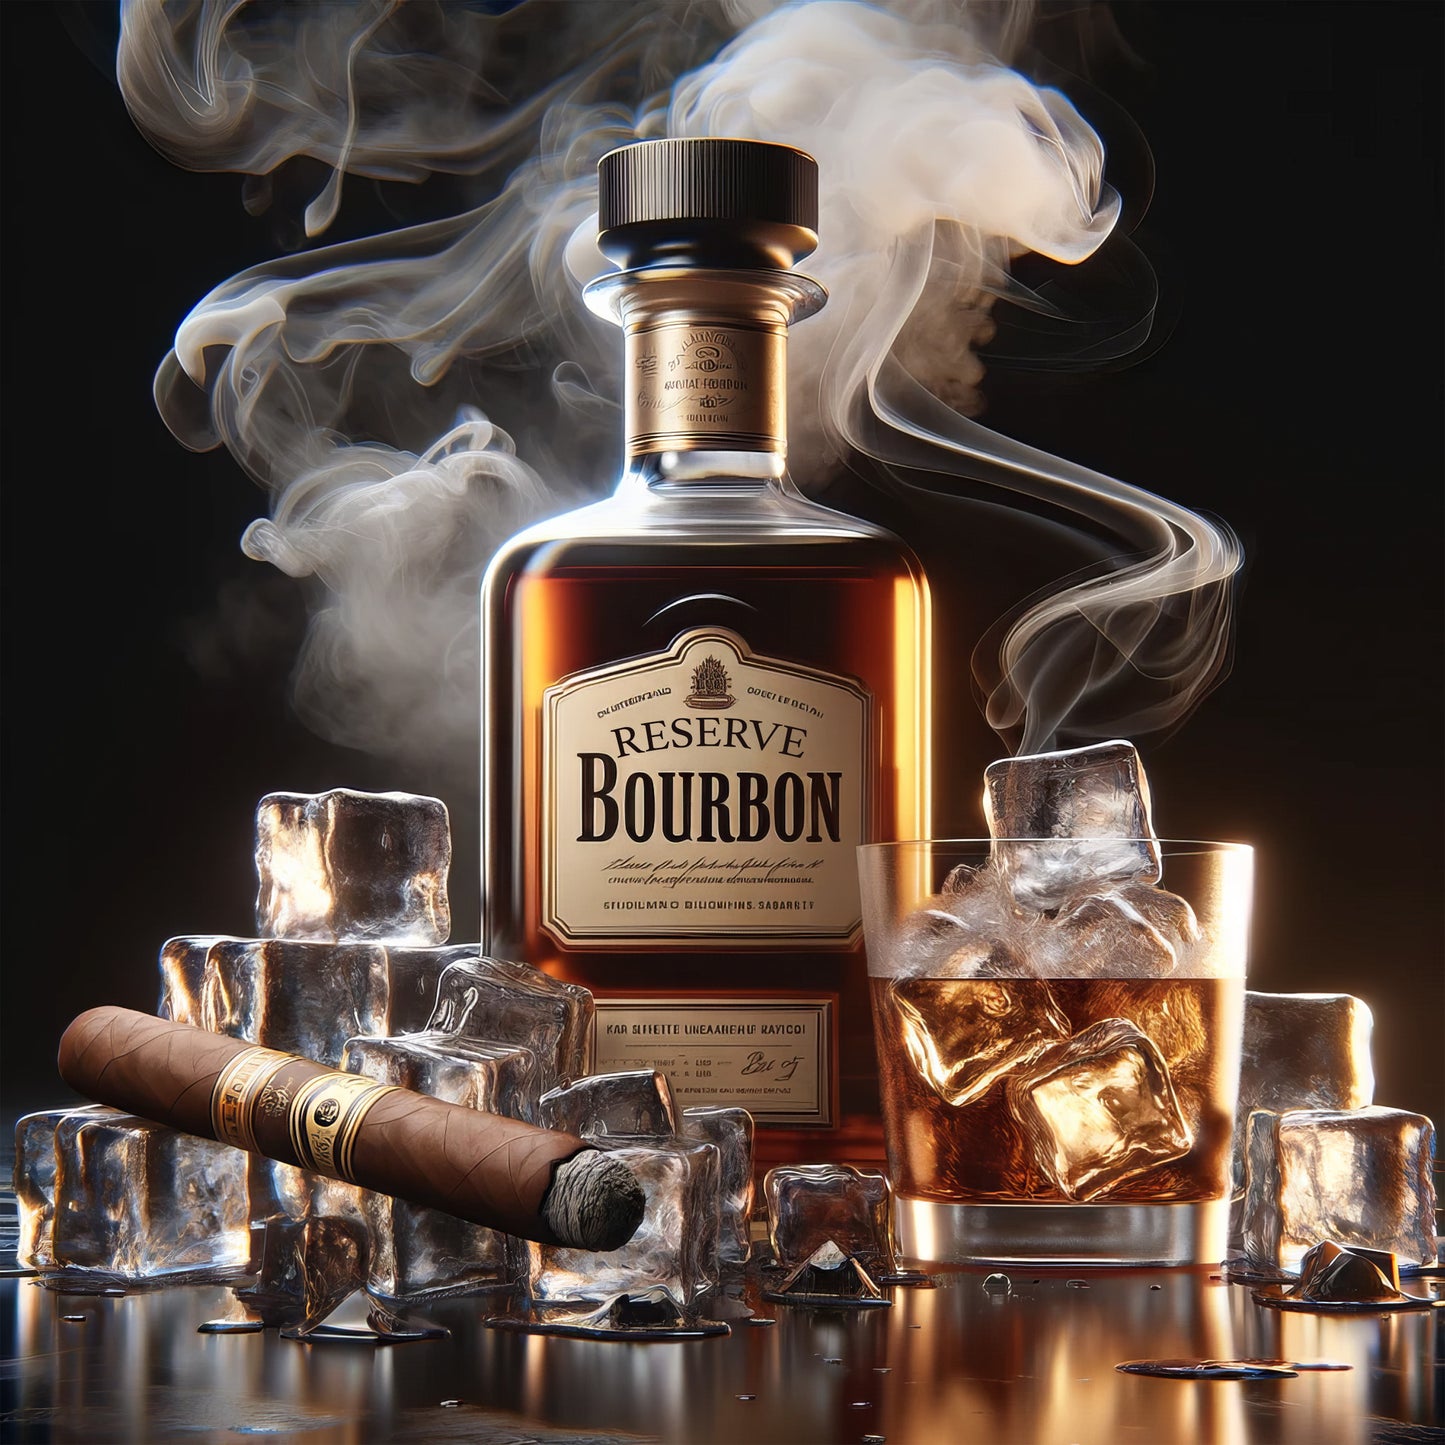 Bourbon on the Rocks